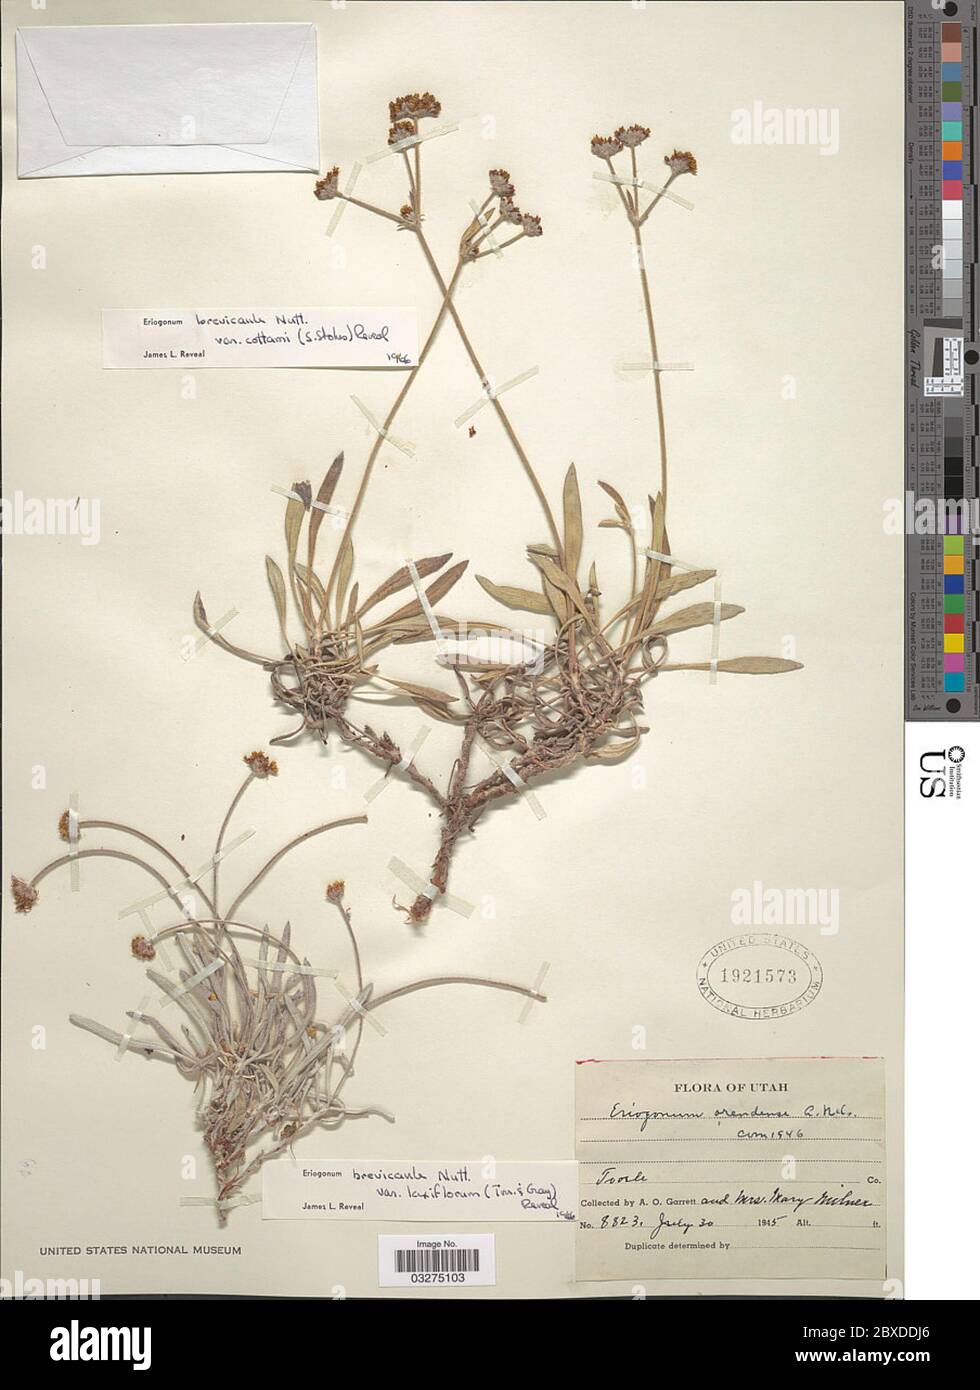 Eriogonum brevicaule var cottmanii S Stokes Reveal Eriogonum brevicaule var cottmanii S Stokes Reveal. Stock Photo